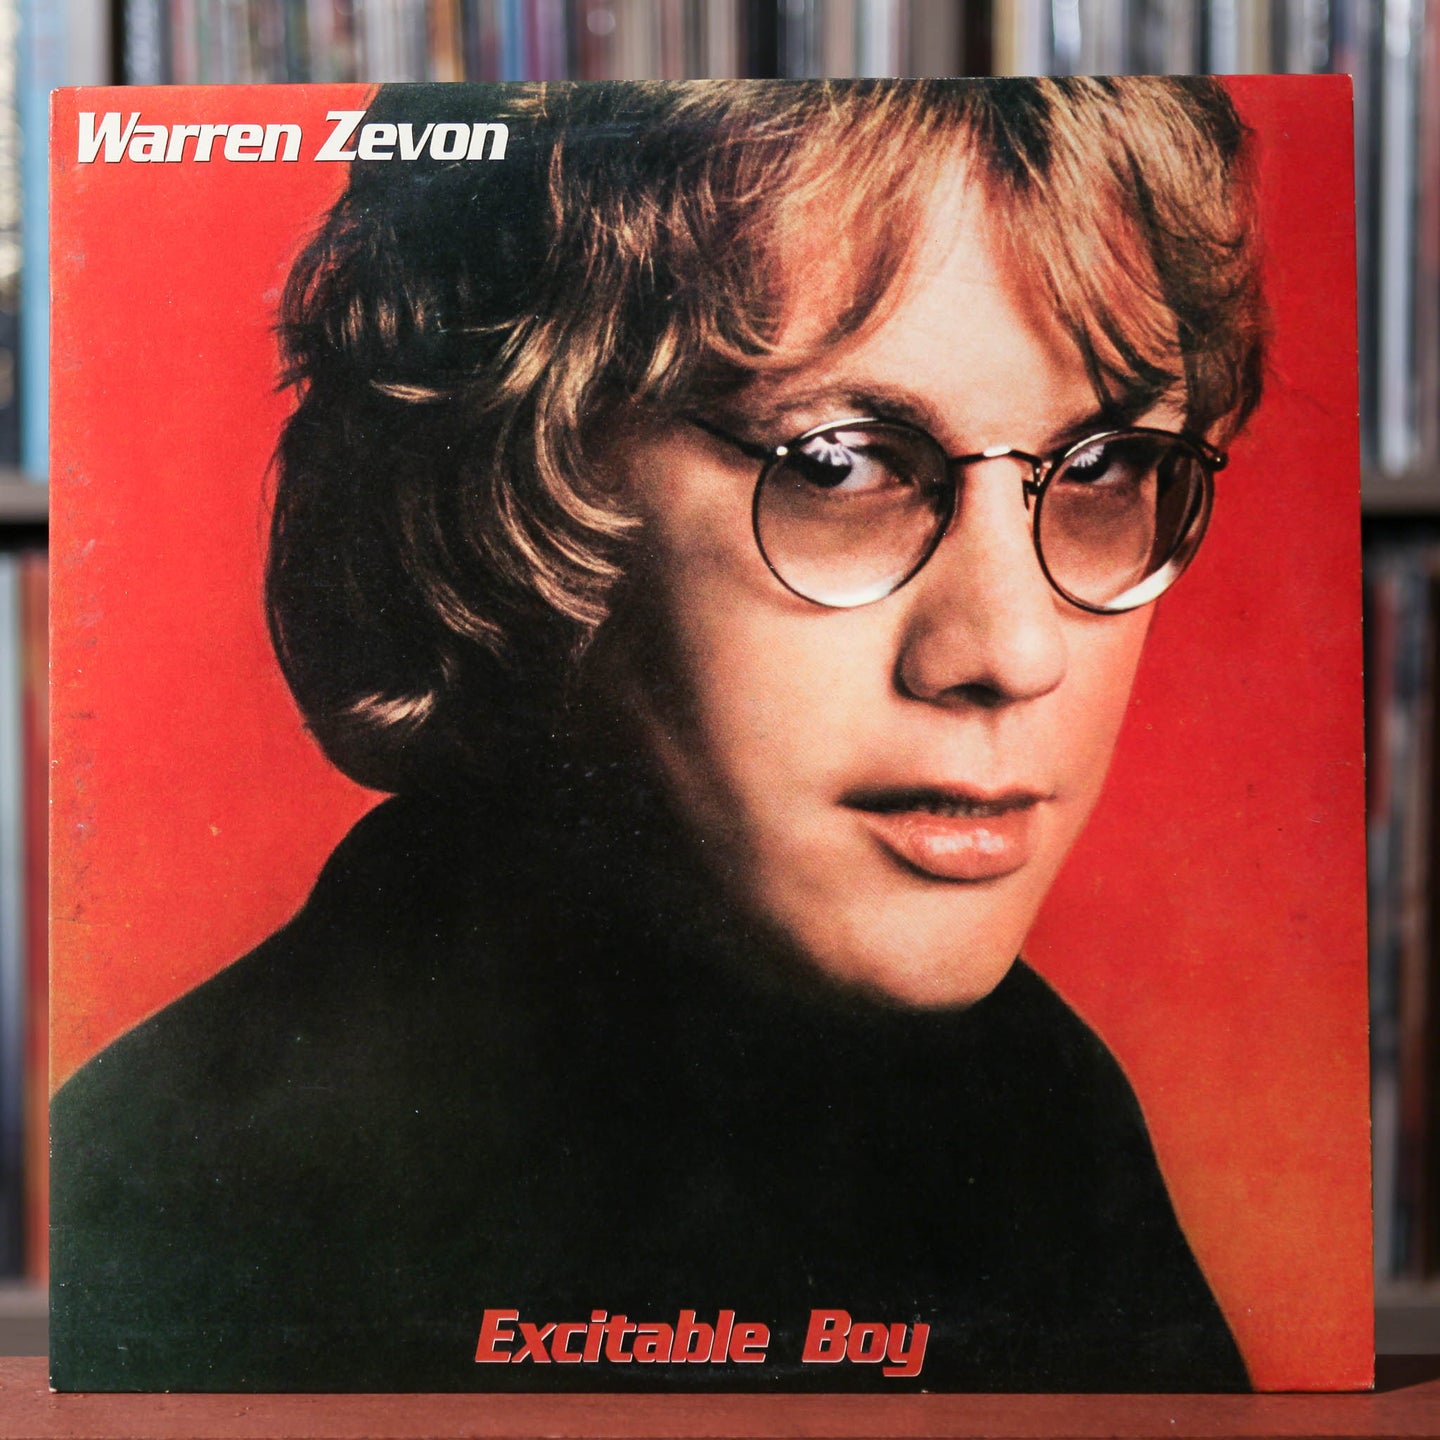 Warren Zevon - Excitable Boy - 1978 Asylum, VG+/VG+